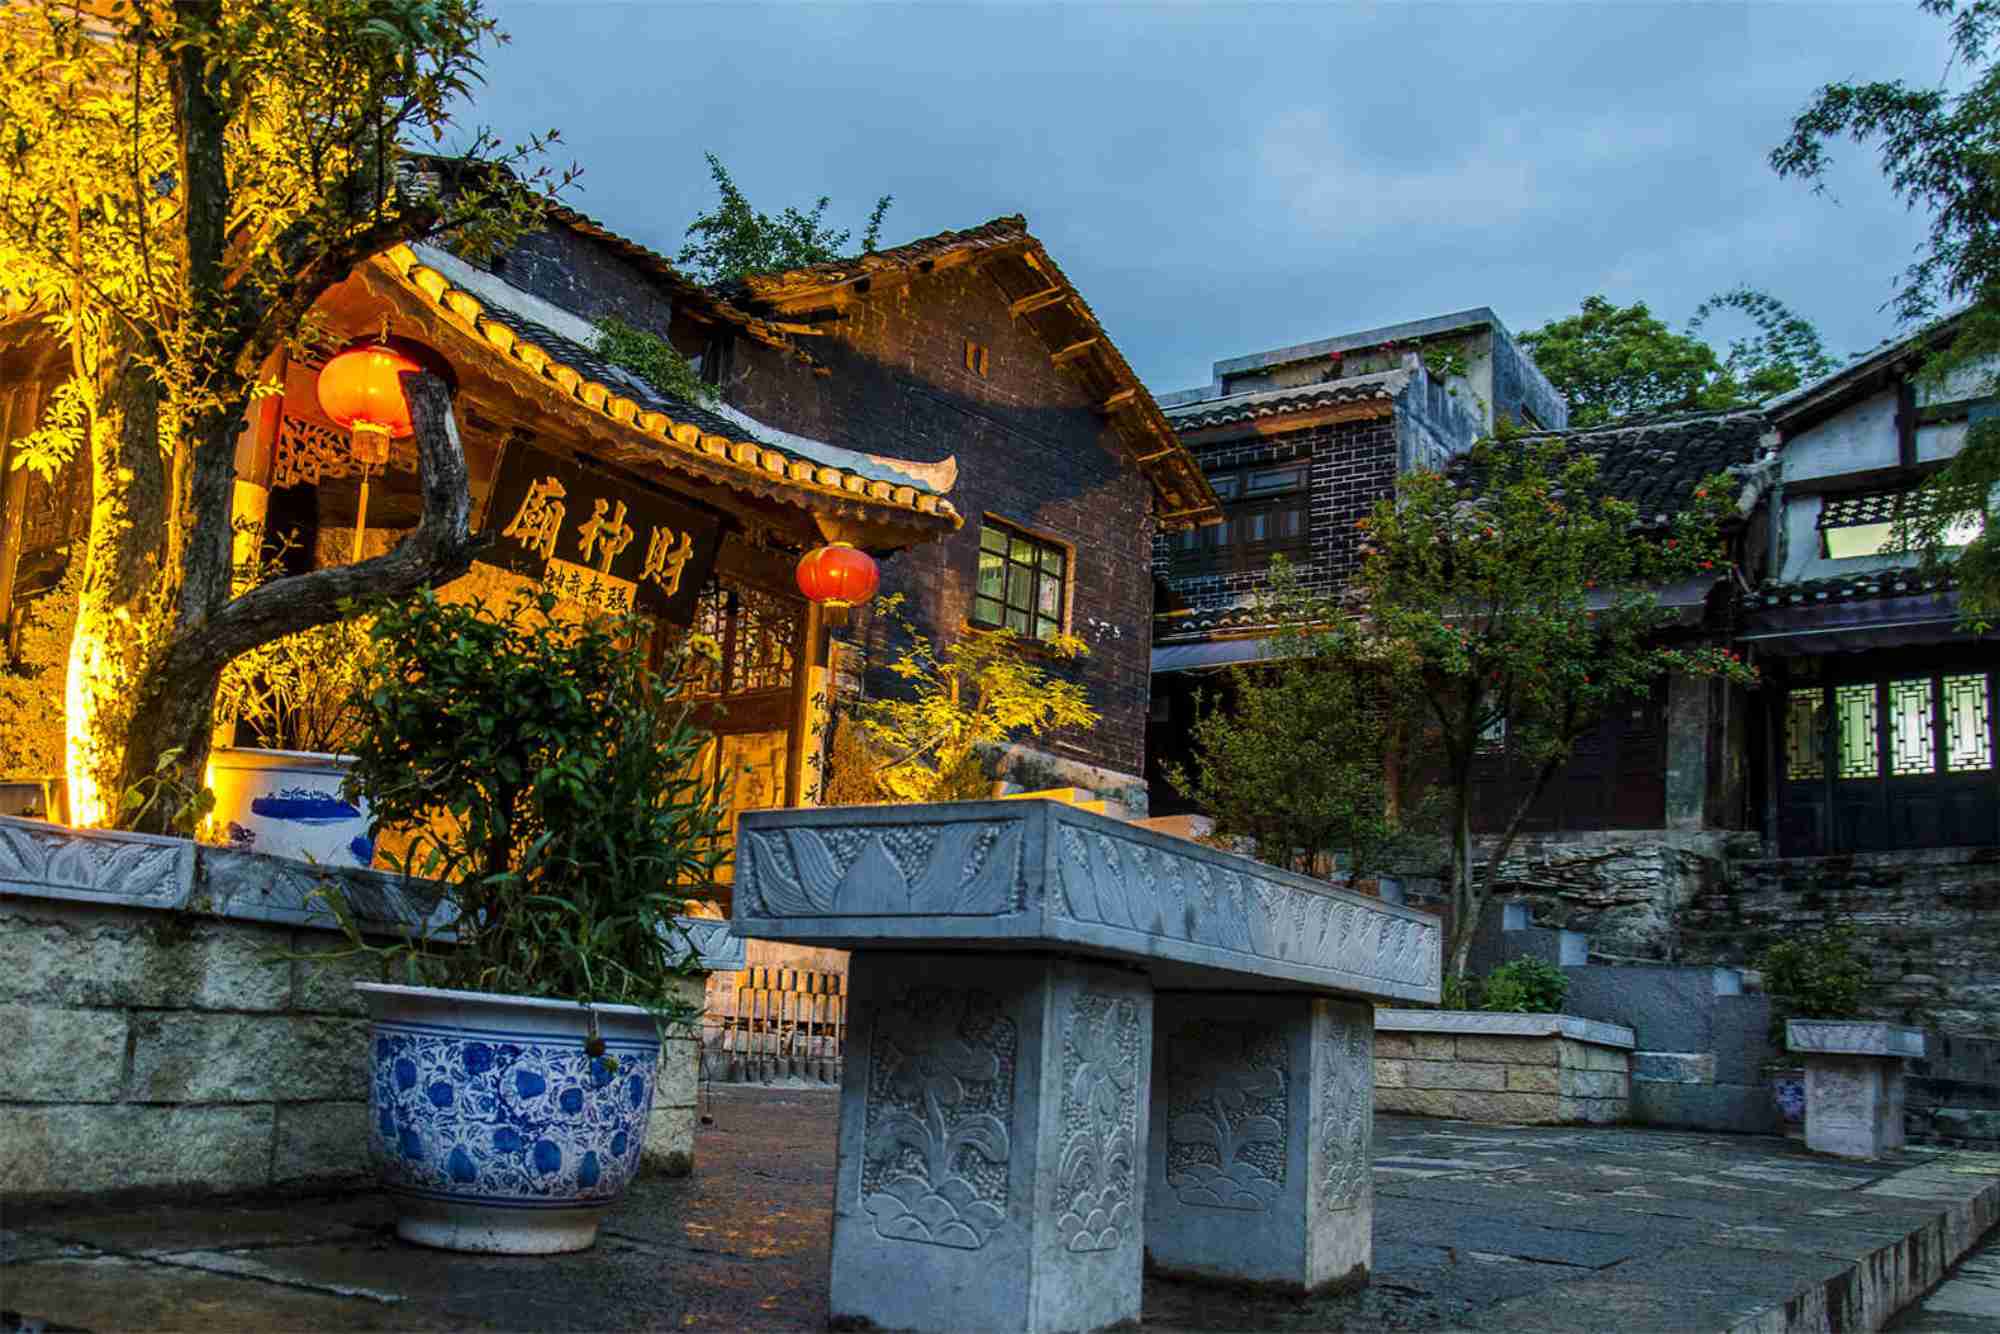 Guizhou Attractions